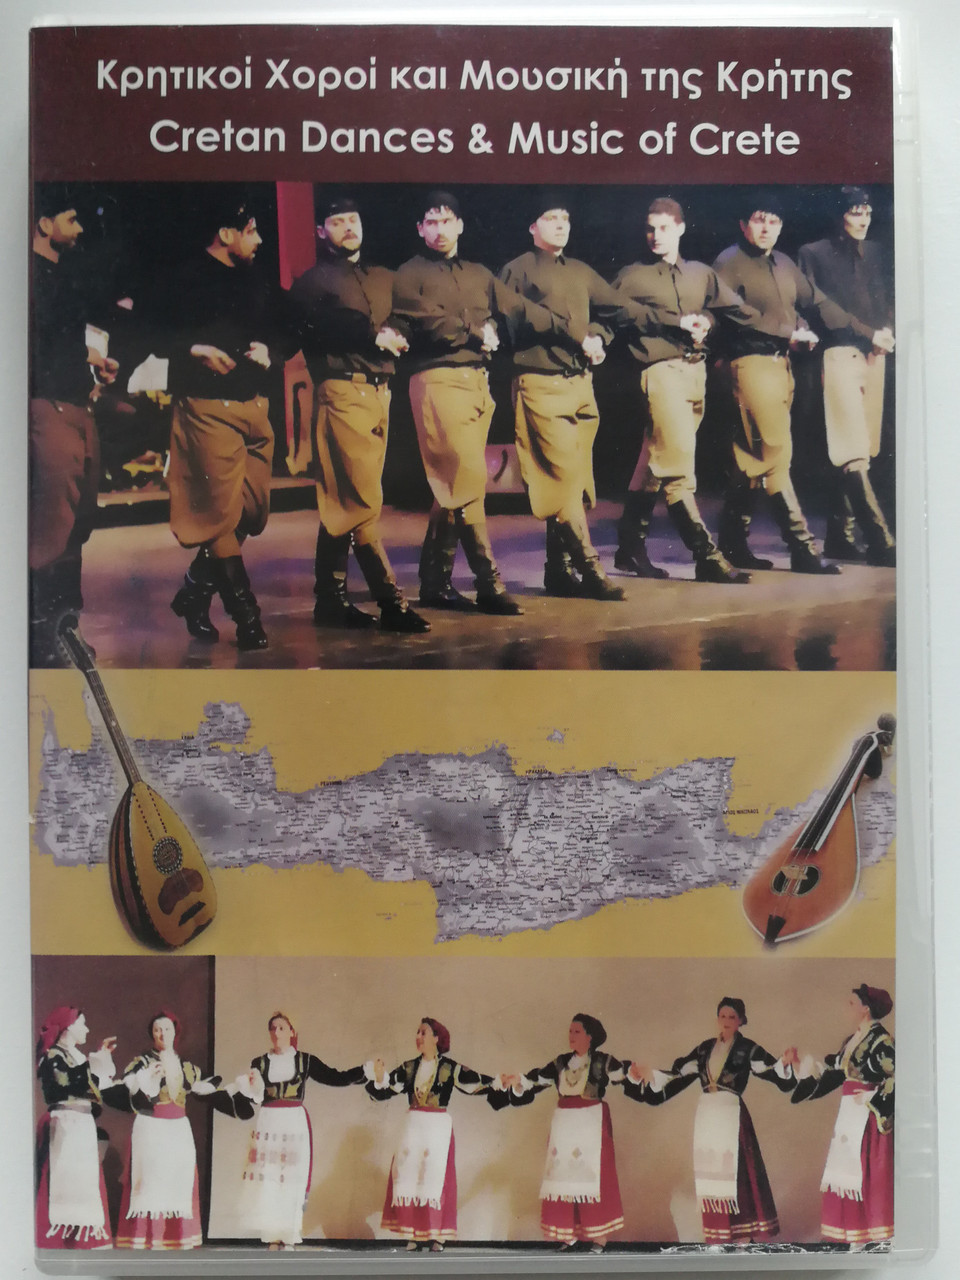 Cretan Dances & Music of Crete DVD / Κρητικοί χοροί και μουσική της Κρήτης  / SEISTRON MUSIC EDITIONS - Bible in My Language